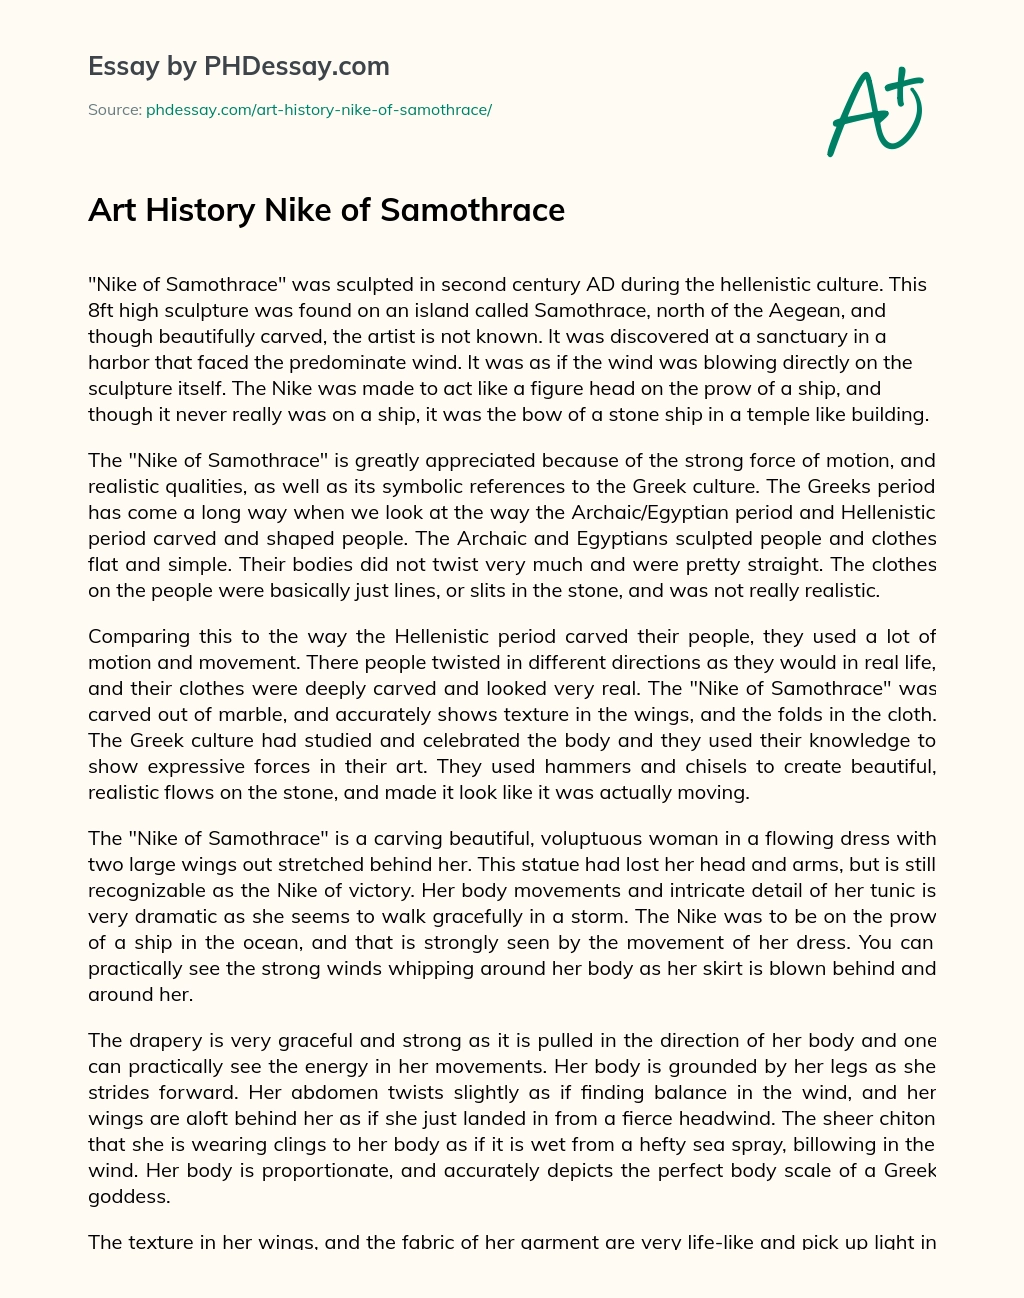 Art History Nike of Samothrace essay